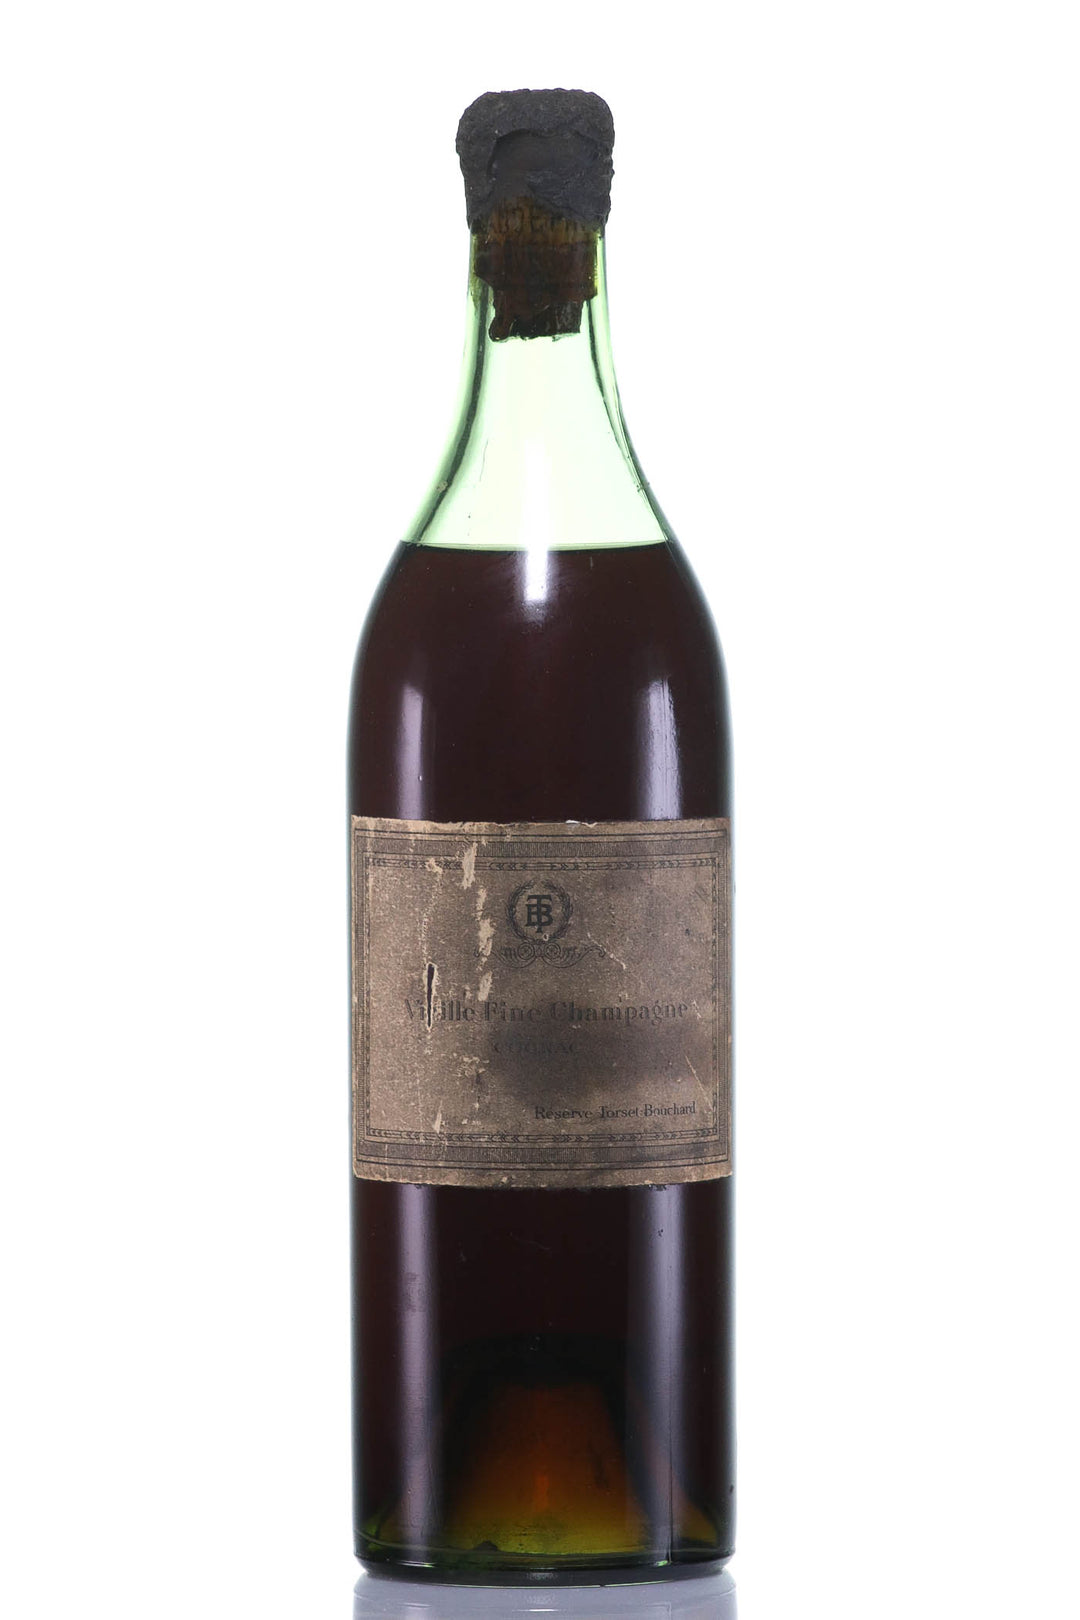 1878 Torset Bouchard Cognac Veille Fine Champagne Reserve - Rue Pinard